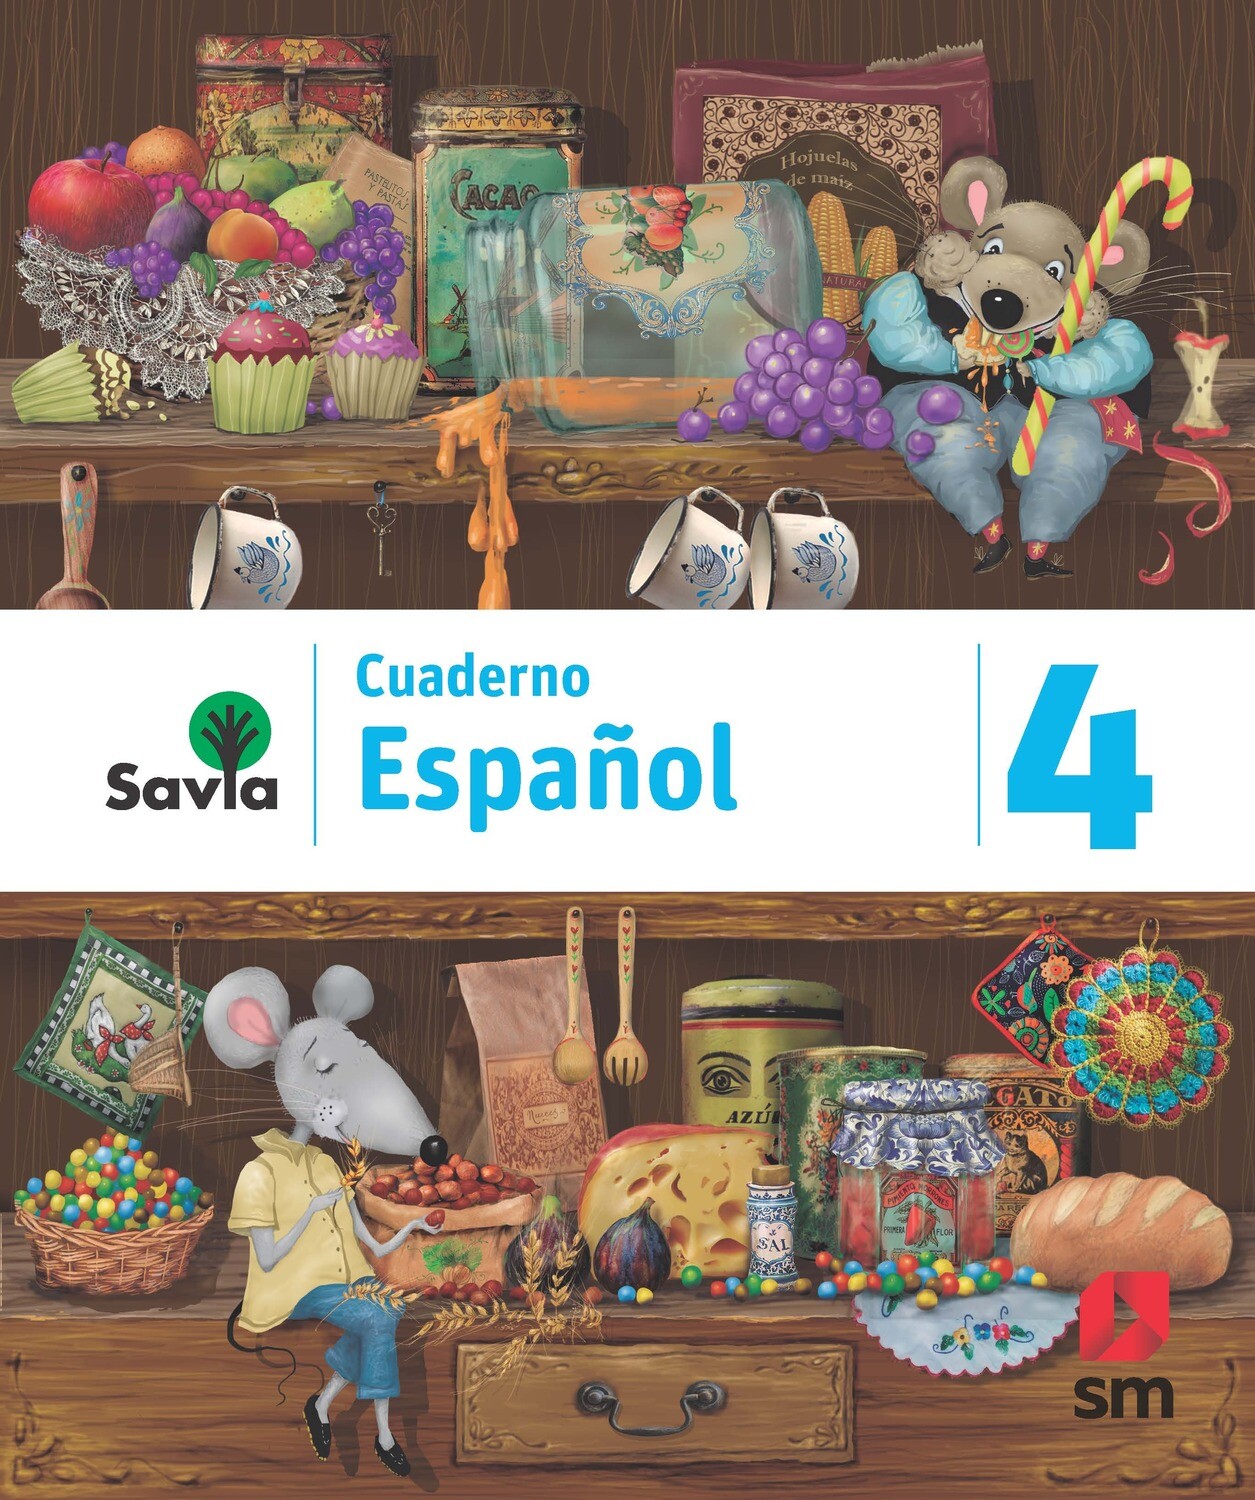 CUARTO - SAVIA ESPAÑOL 4 CUADERNO - SM - 2019 - ISBN 9781630146641